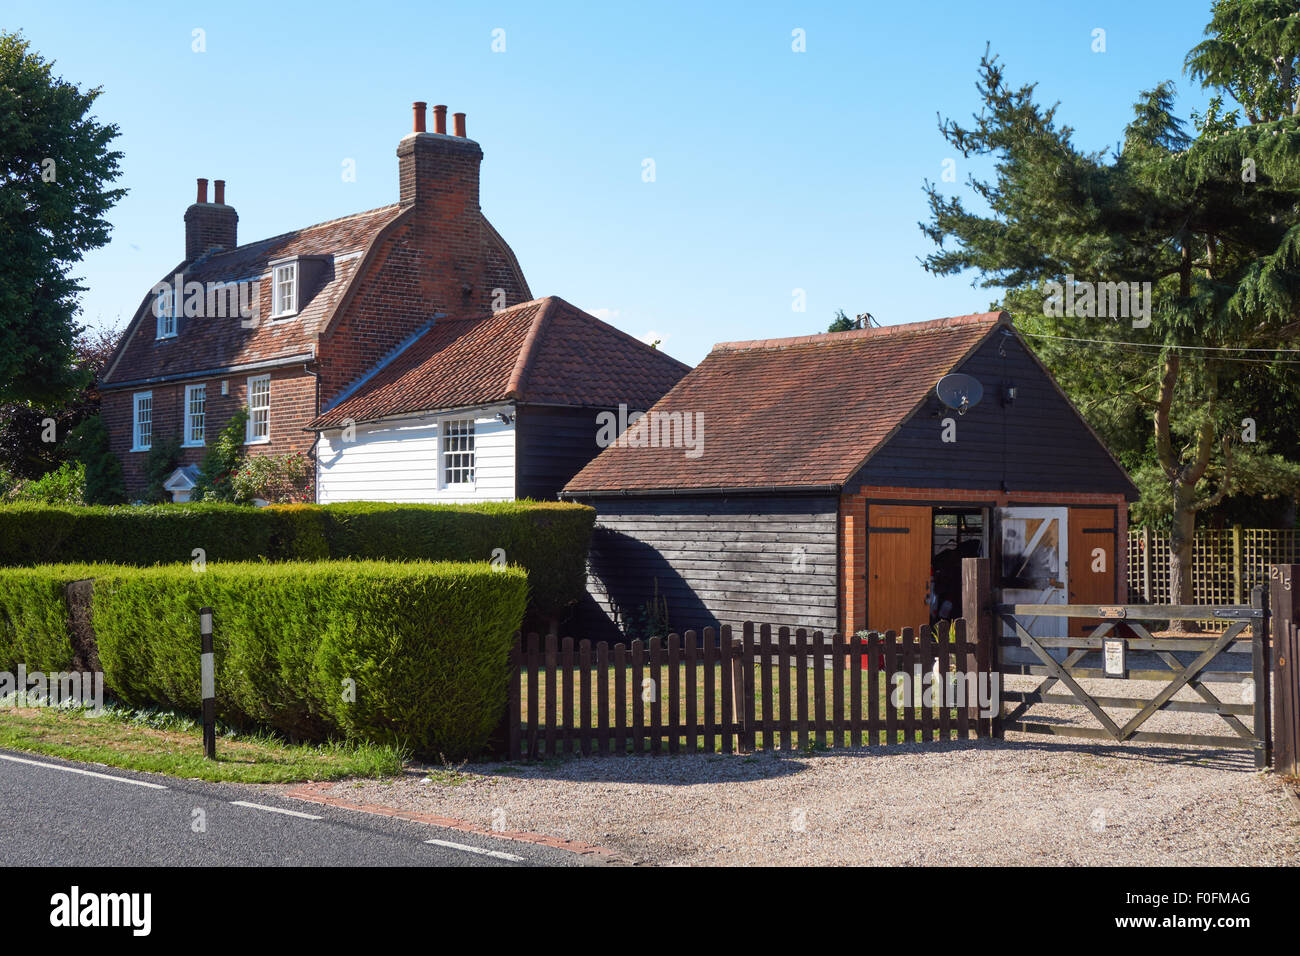 Cottage anglais à Brentwood, Essex, Angleterre Royaume-Uni UK Banque D'Images